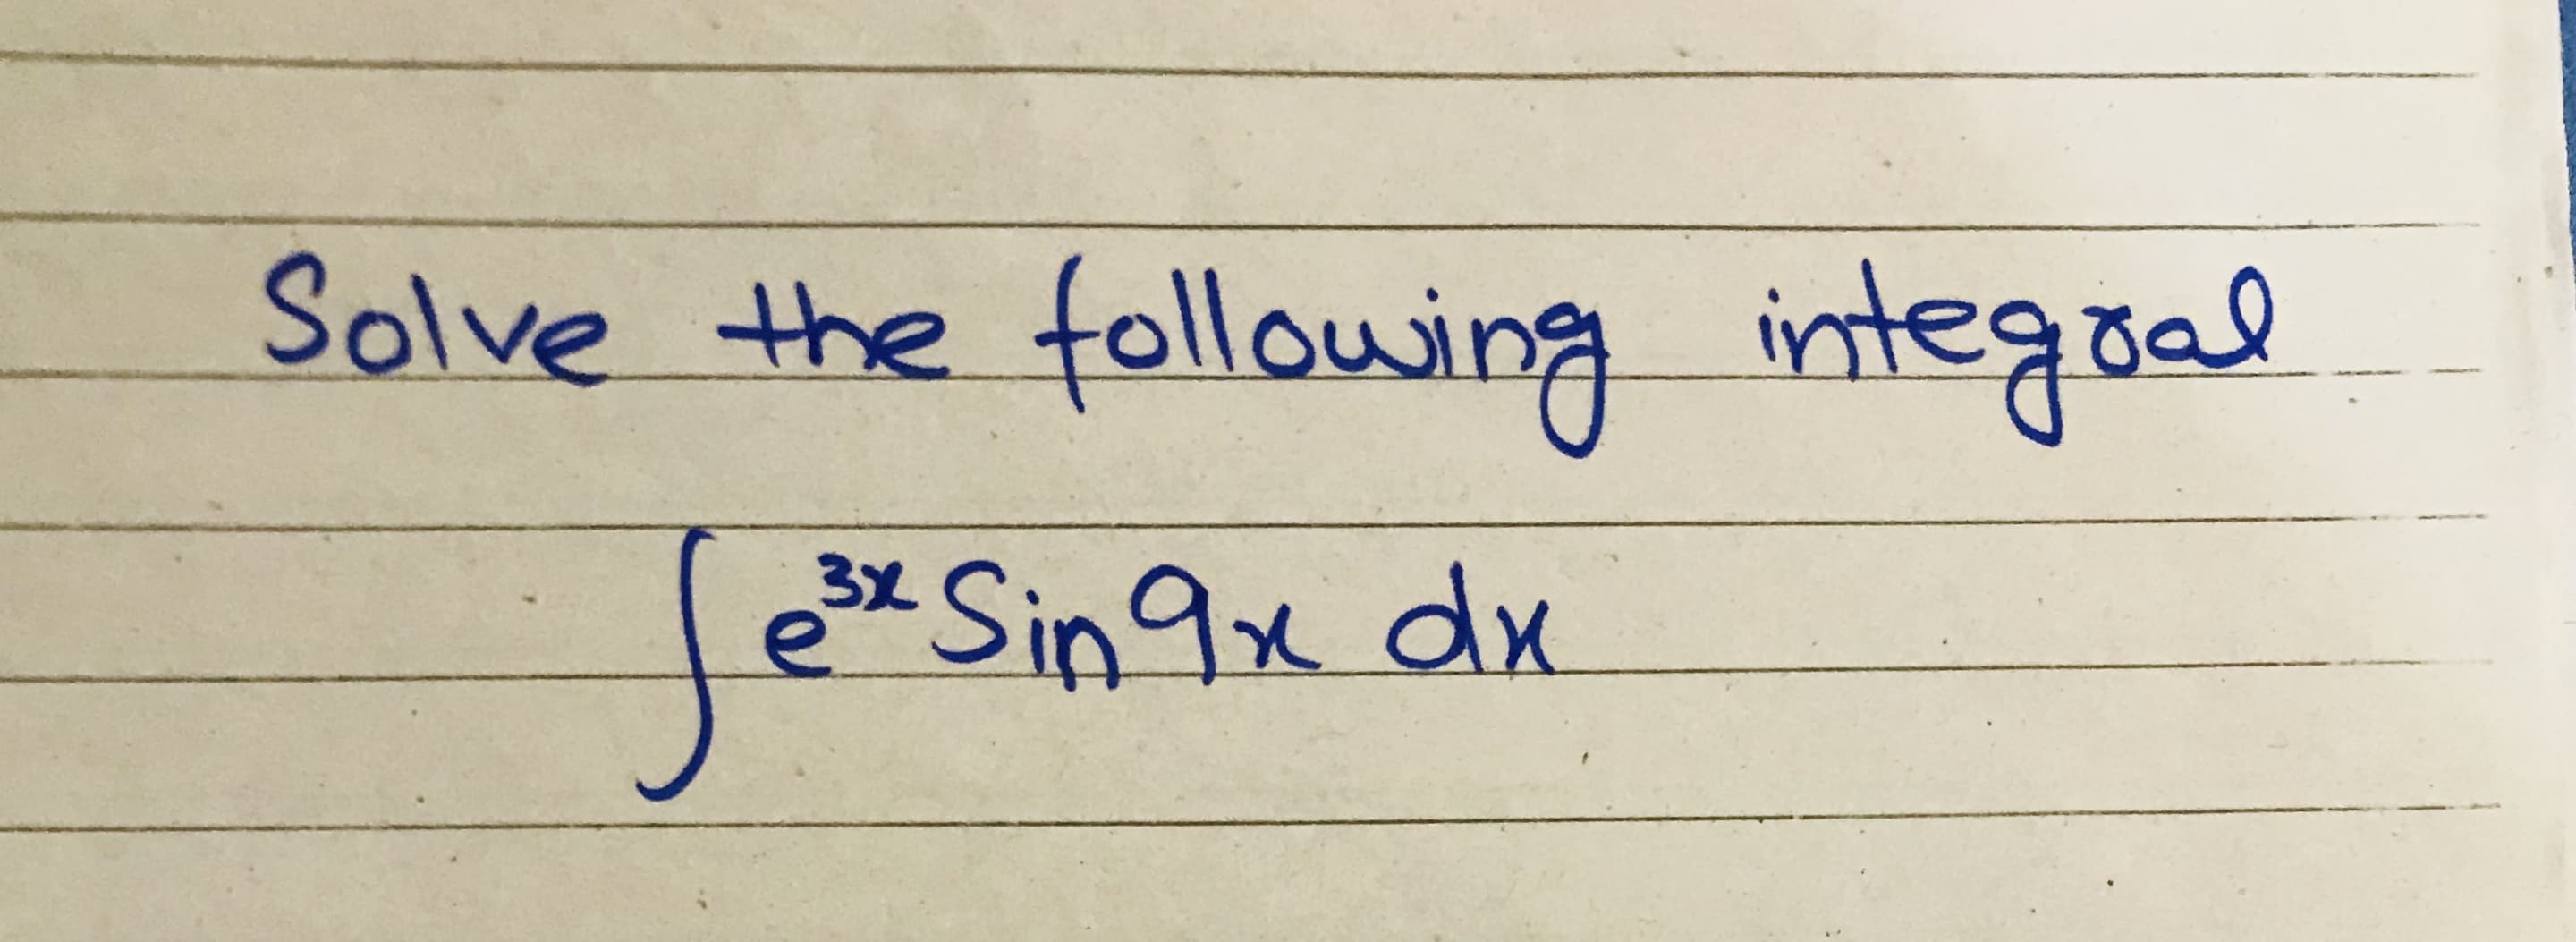 Solve the
following integoal
*Sin9x dx
